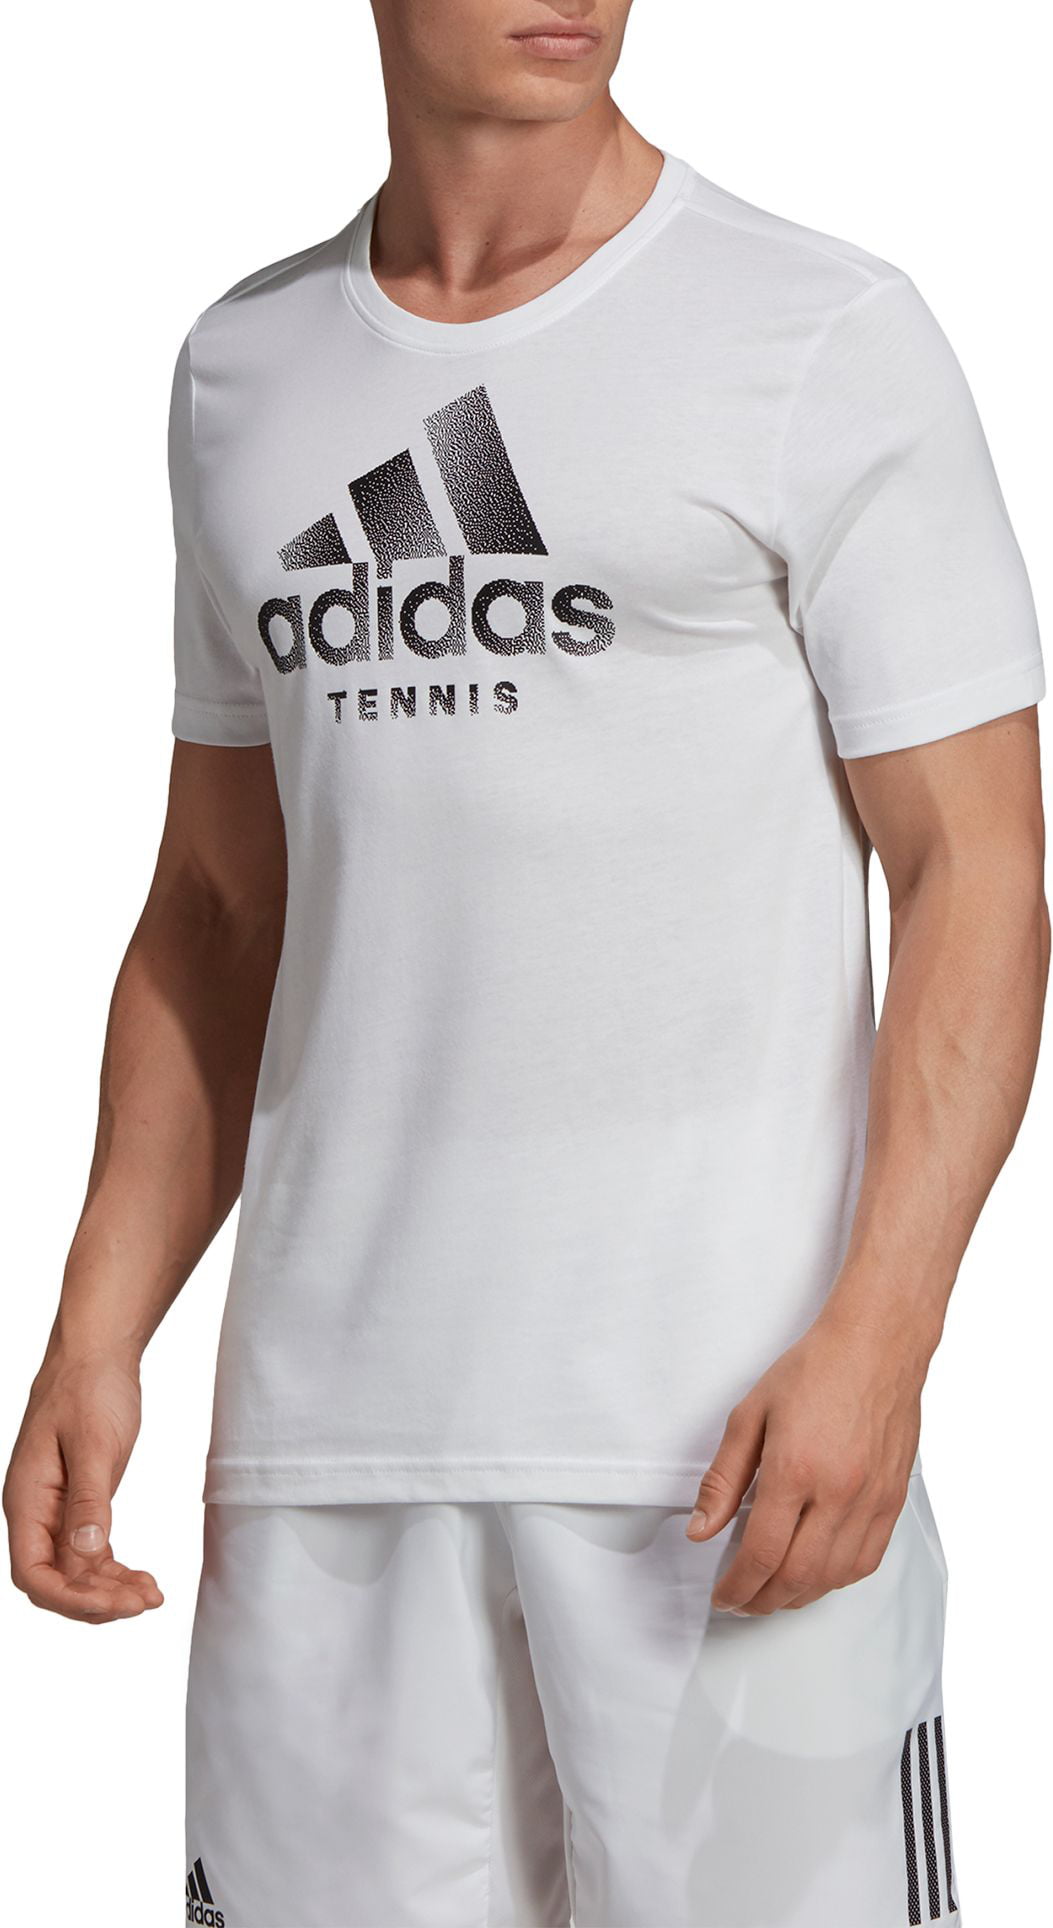  Adidas  adidas  Men s Category Logo Tennis  T Shirt  